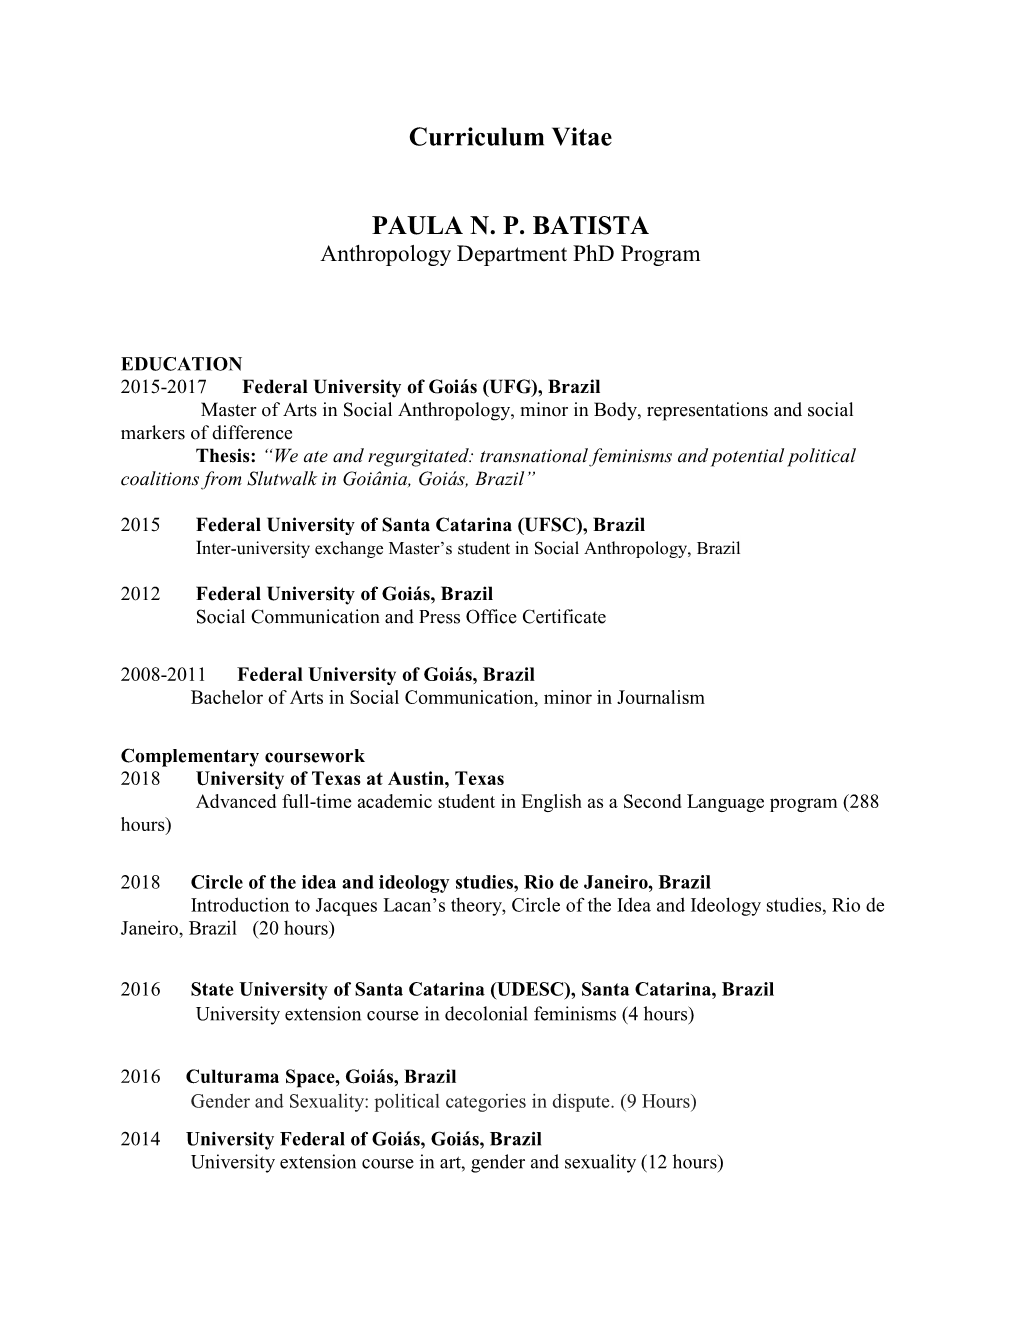 Curriculum Vitae PAULA N. P. BATISTA